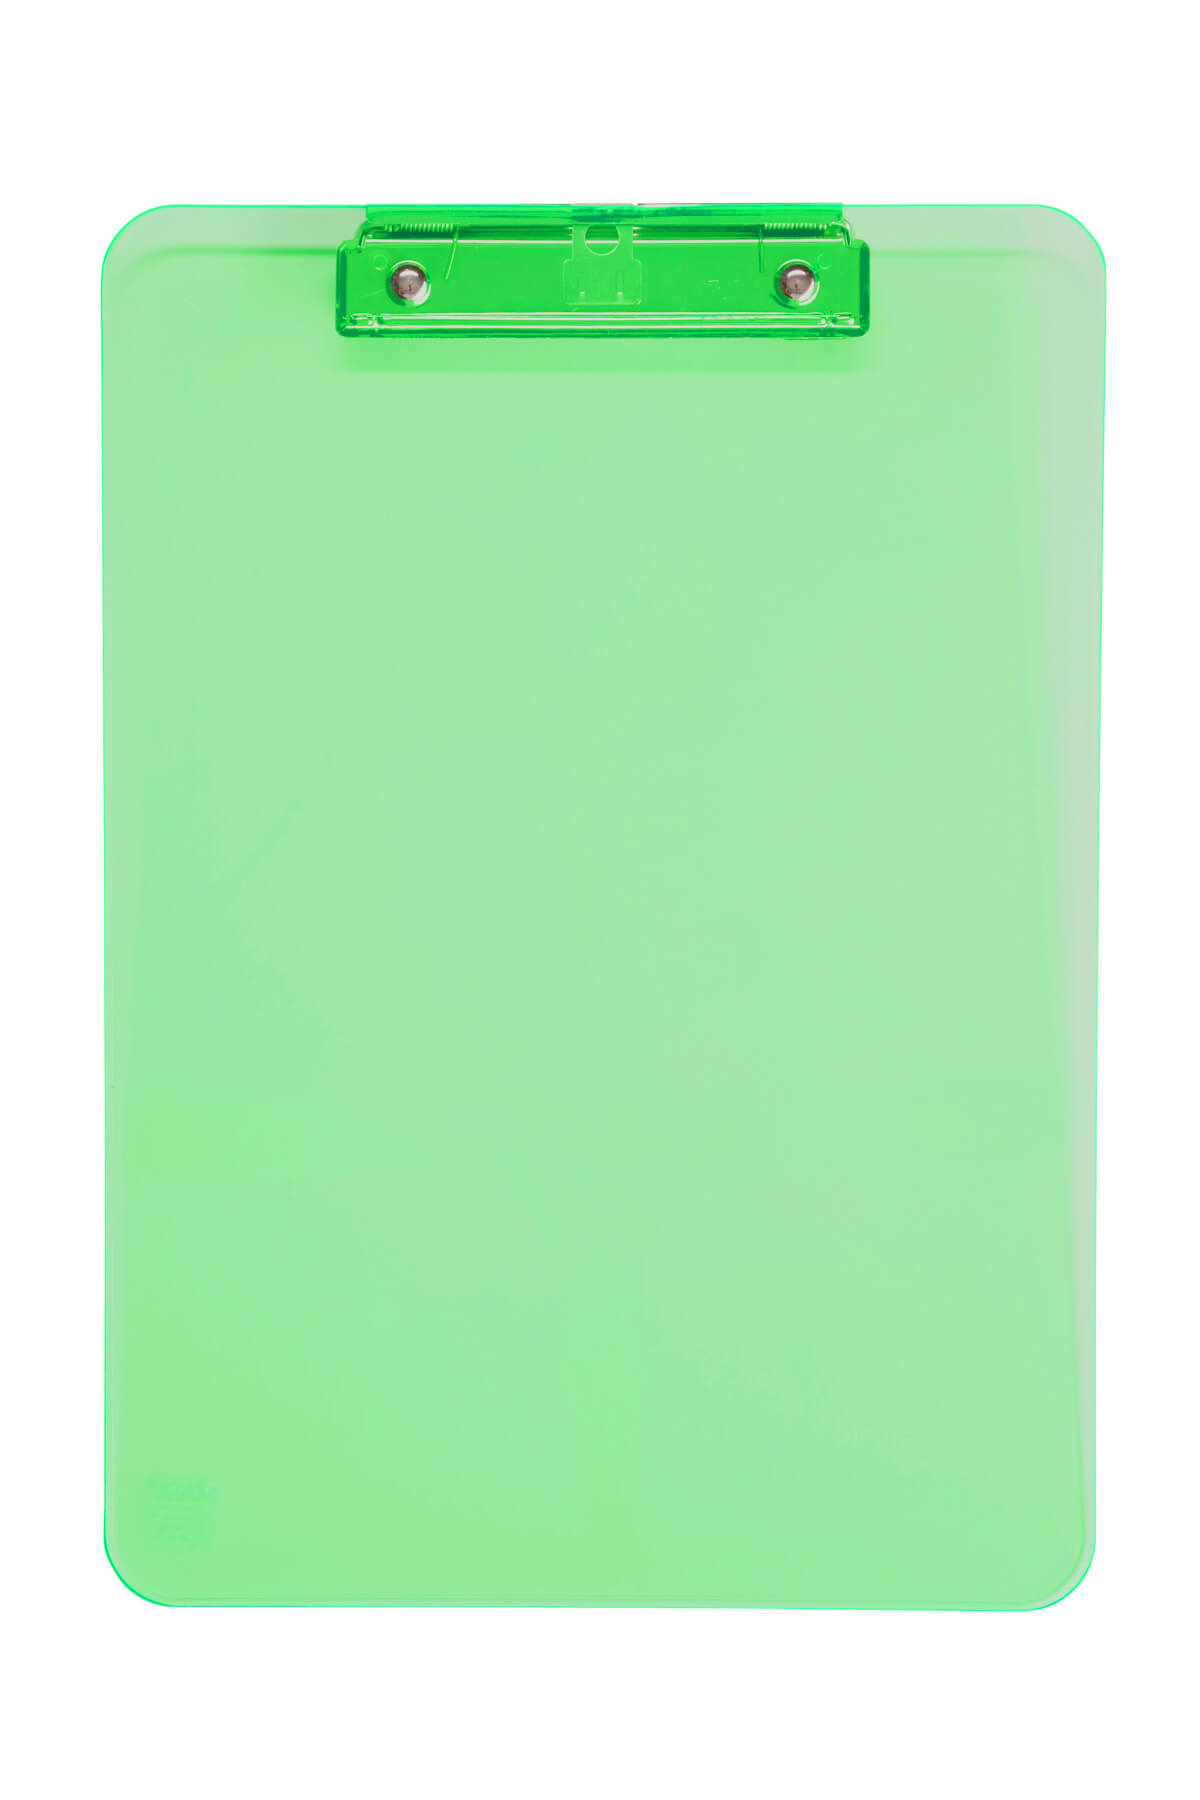 Transparent Clipboard Maulneon Brand Maul Dimension A4 Type Vertical